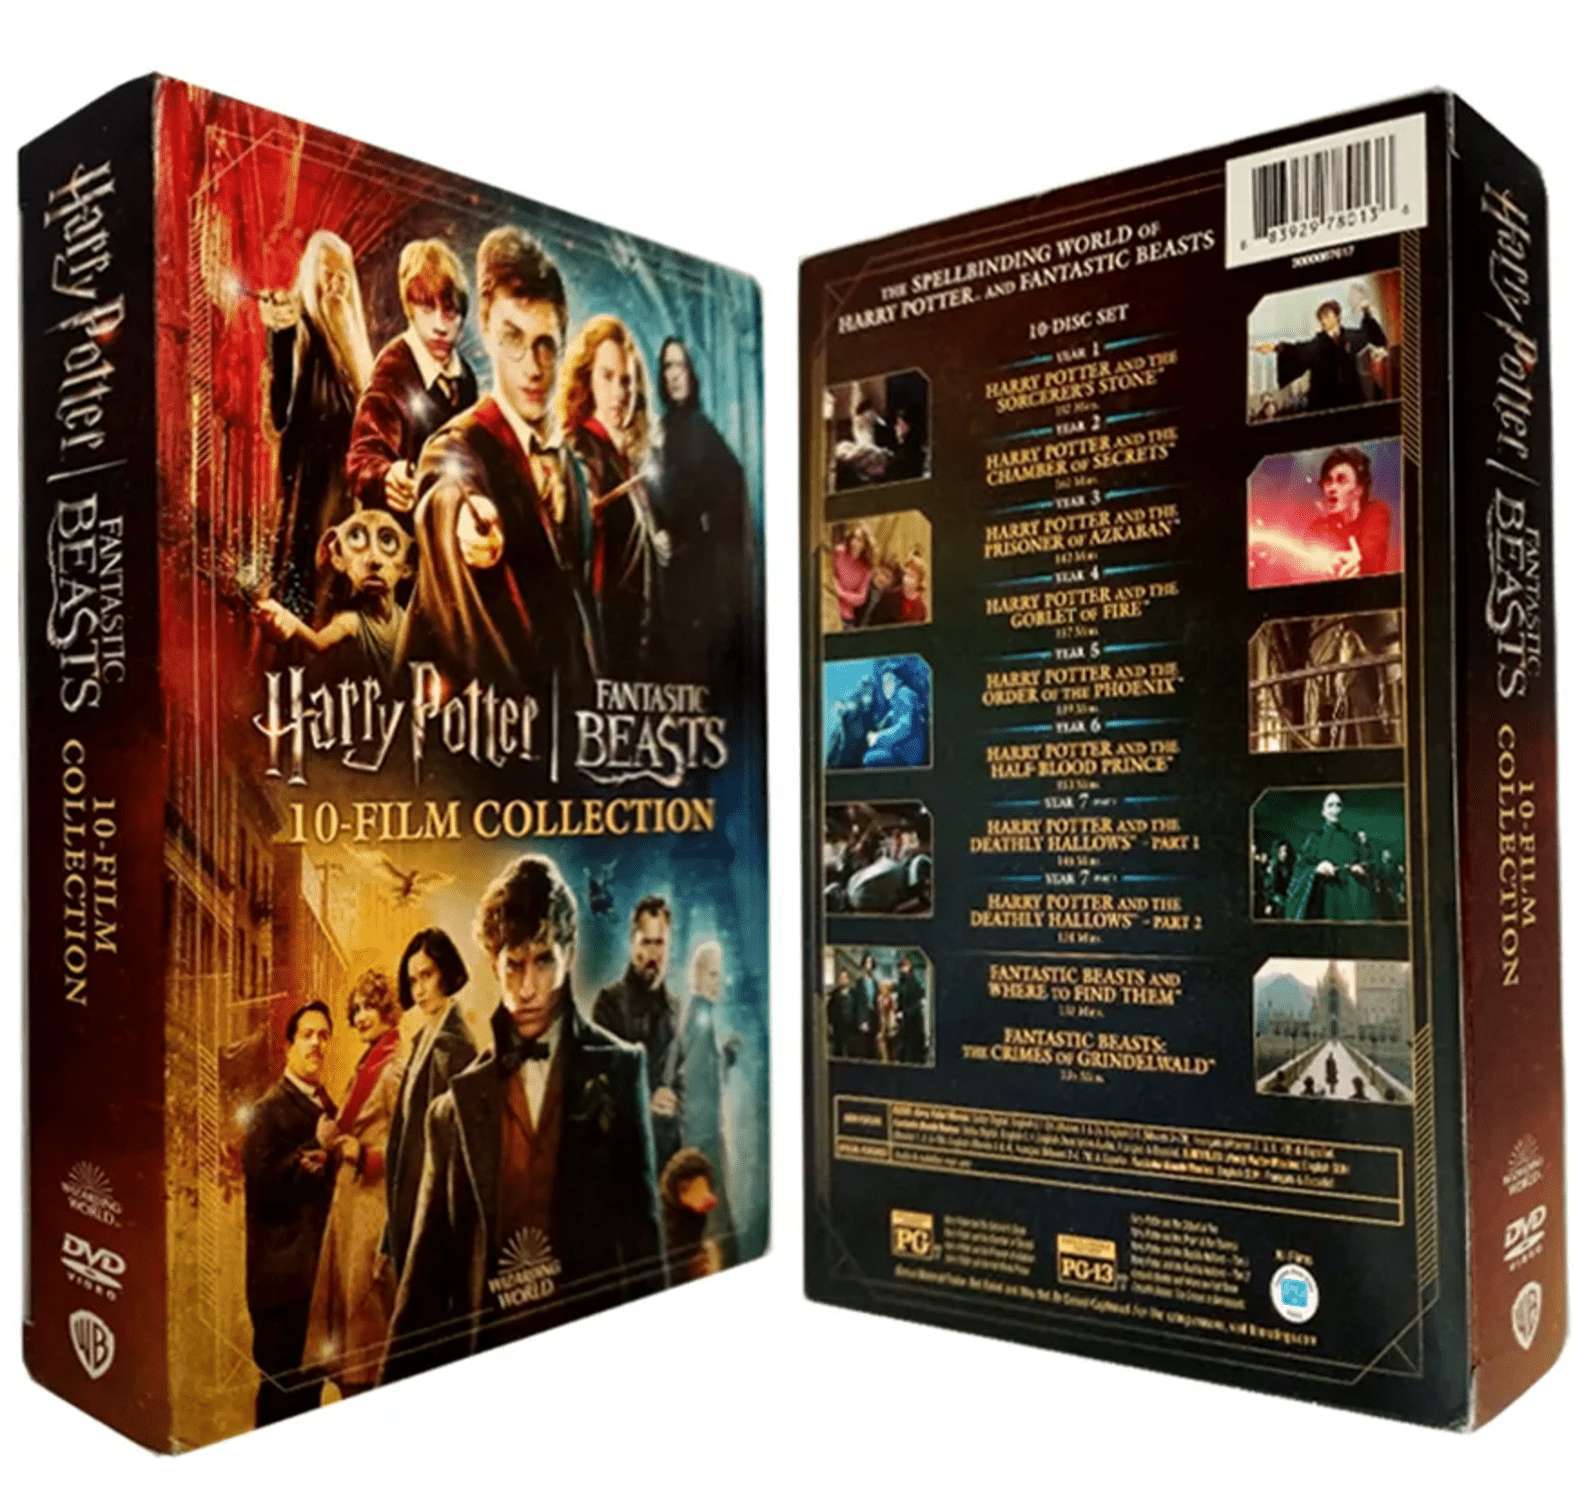 Harry Potter: The Complete 8-Movie Series Plus + Two Bonus Features [10-Films]